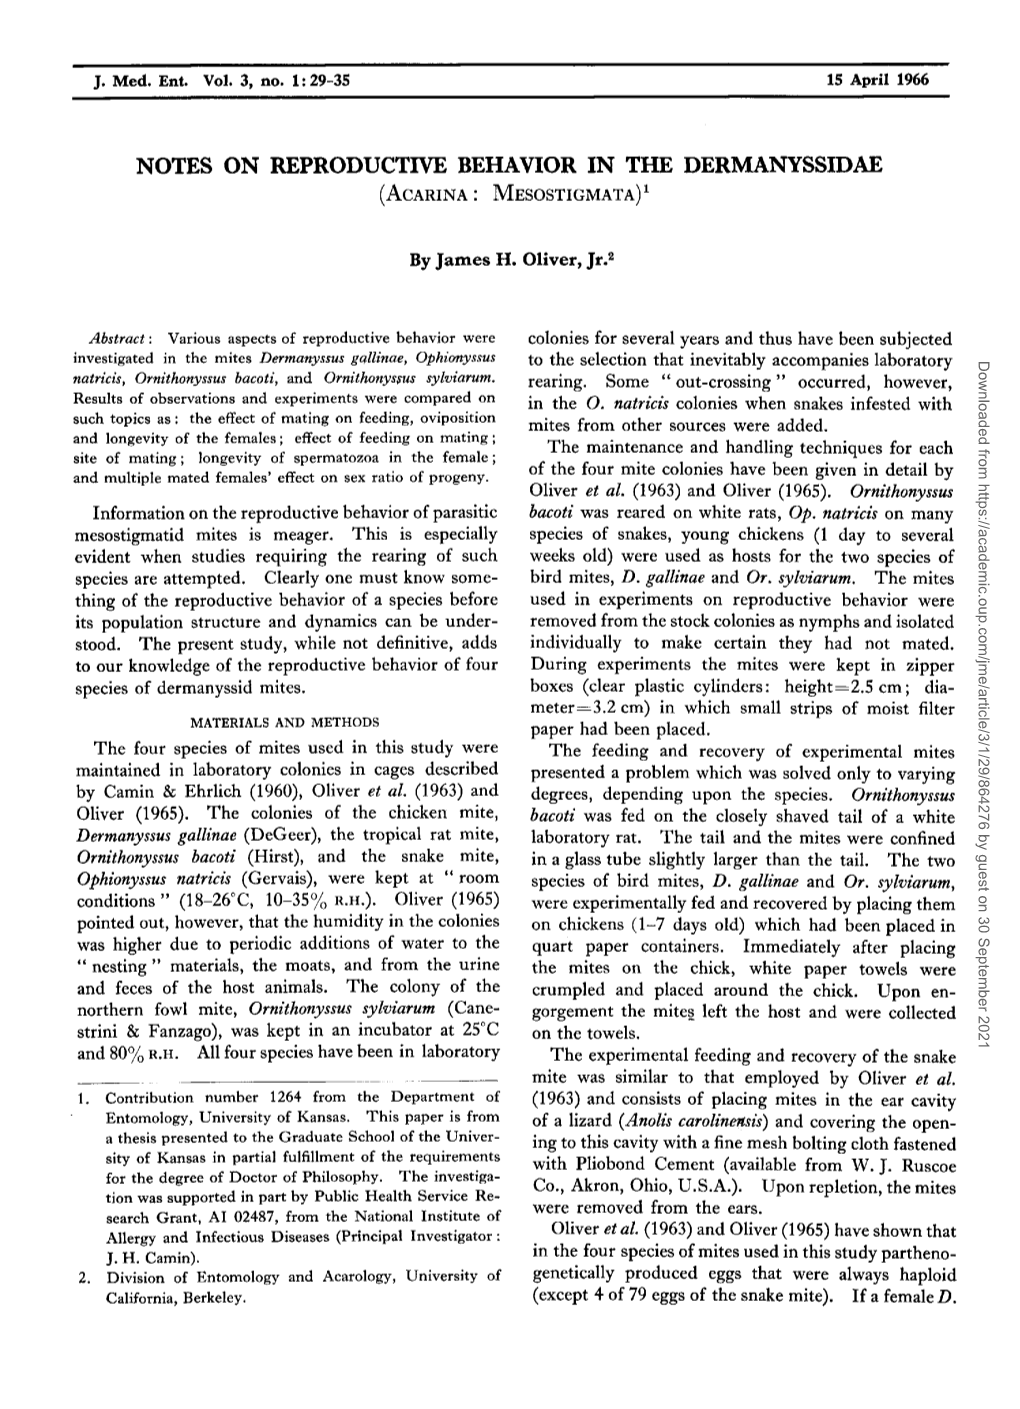 Notes on Reproductive Behavior in the Dermanyssidae 1 (Acarina: Mesostigmata)